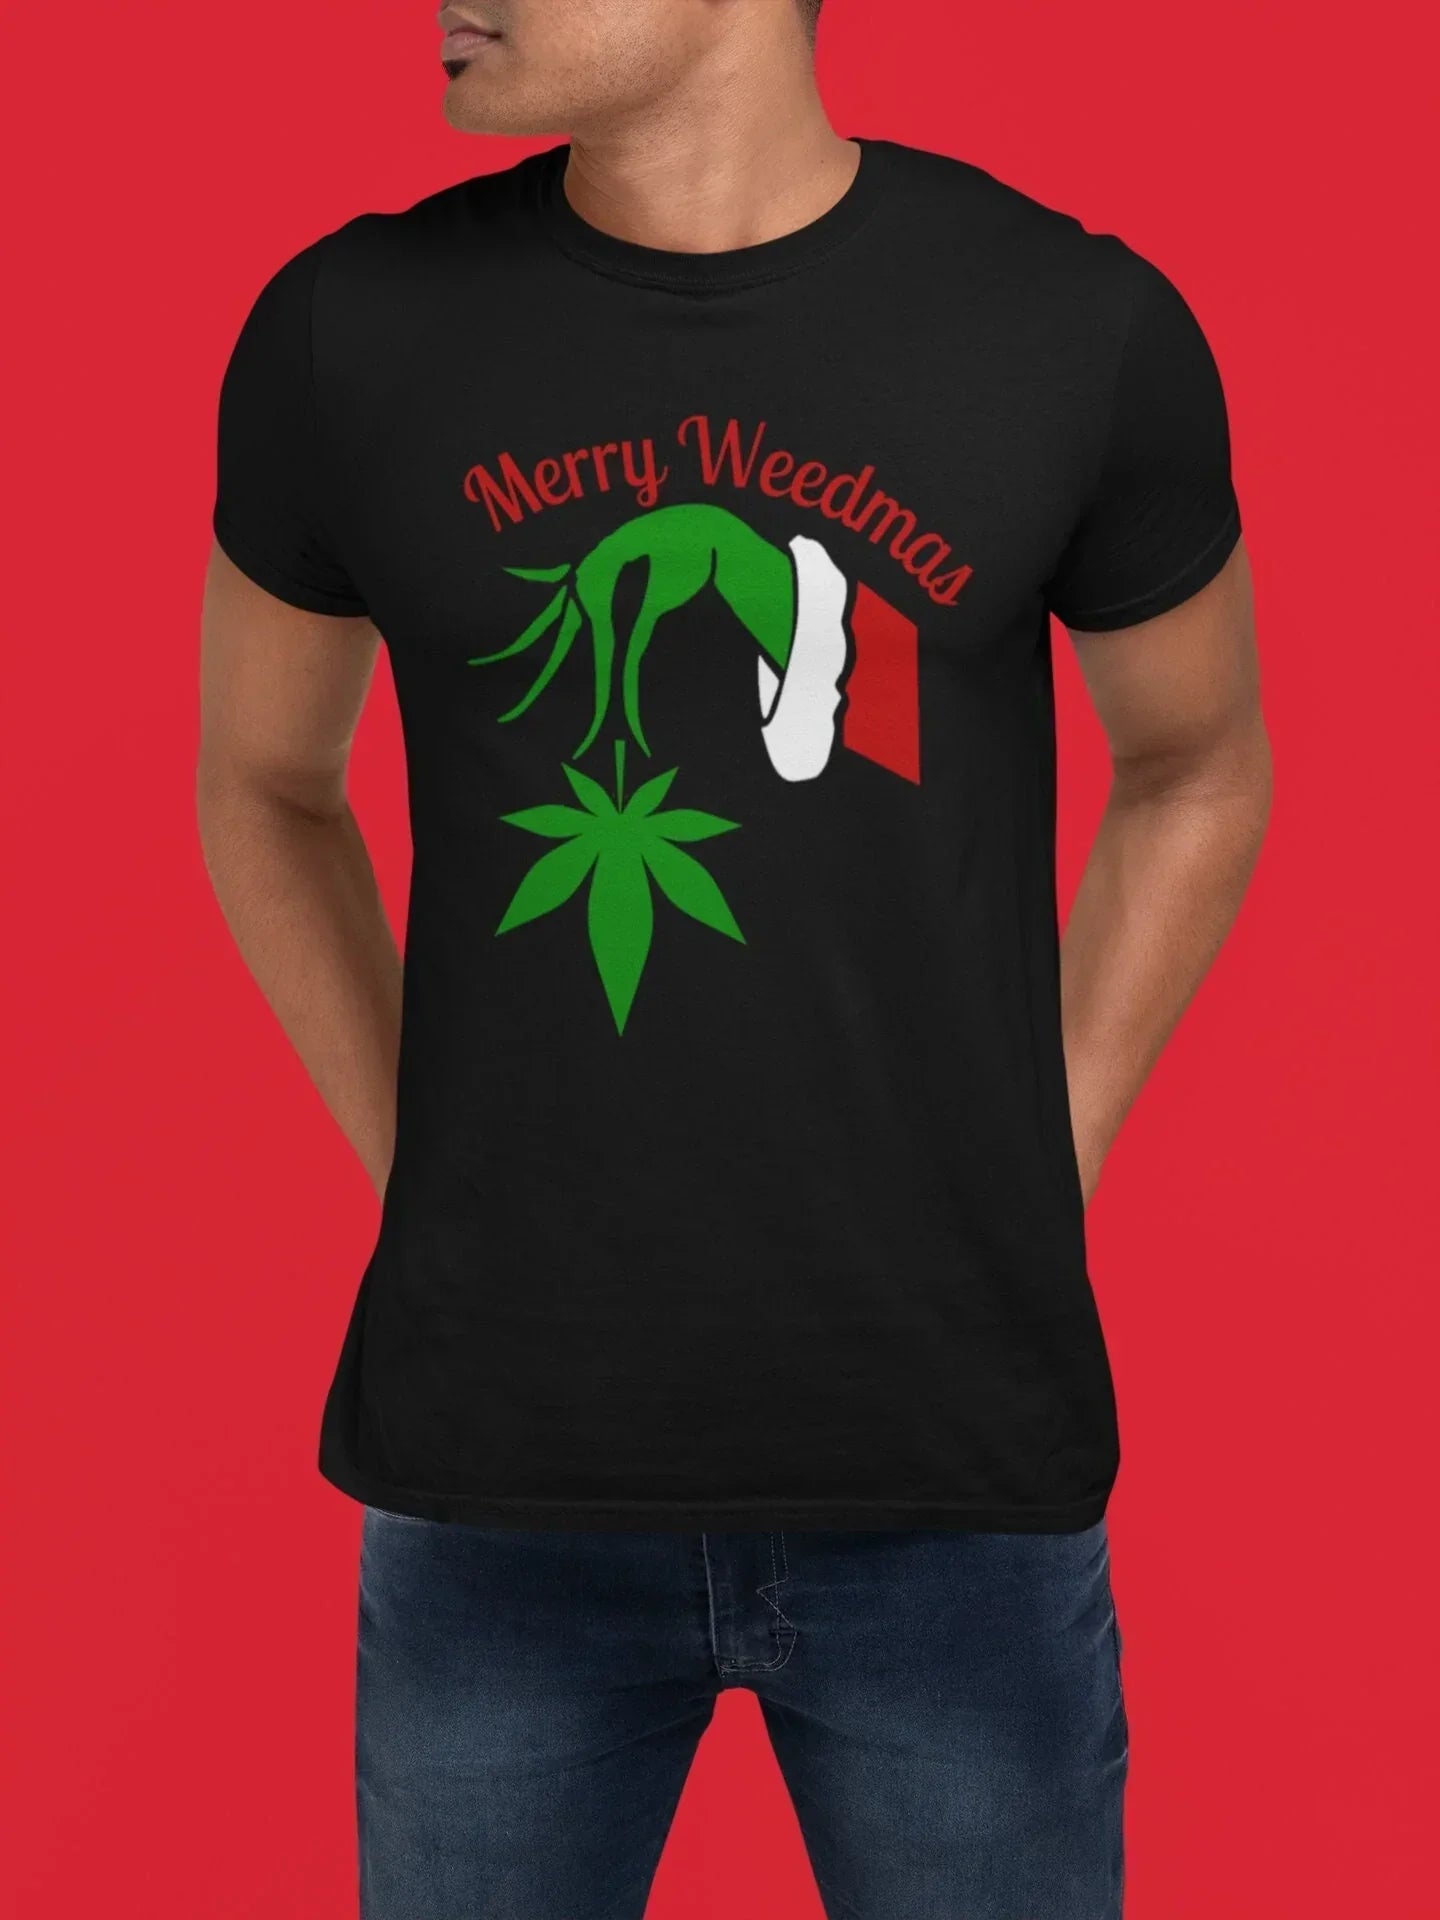 Merry Weedmas Shirt, Gift for Her, Stoner Girl, Cannabis Clothes, Gift for Him, Marijuana Sweatshirt, Weed Mom, Hoodie, Christmas Sweater HMDesignStudioUS